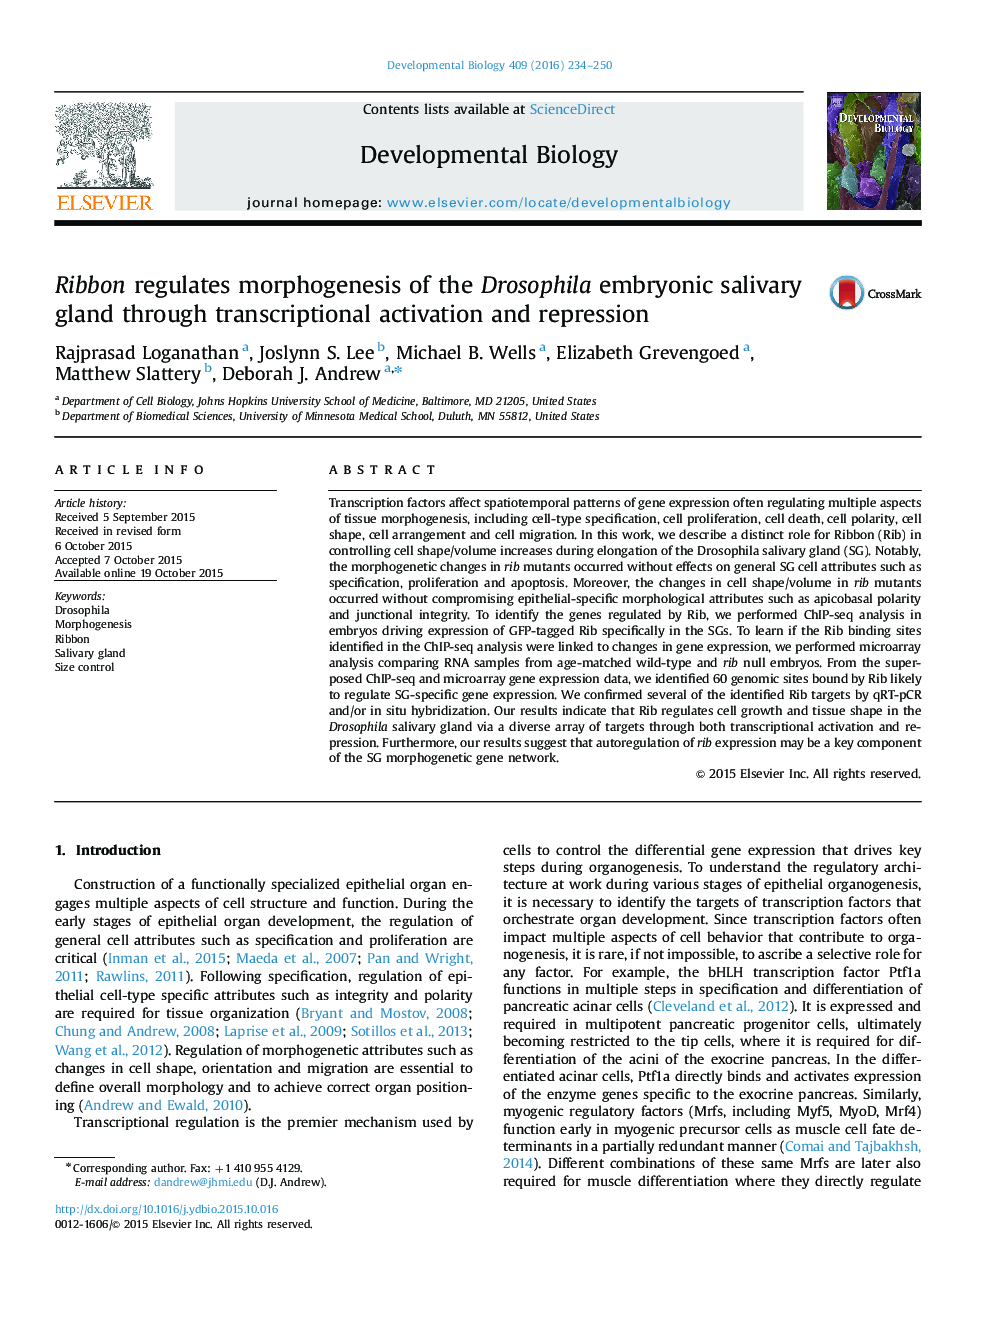 Ribbon regulates morphogenesis of the Drosophila embryonic salivary gland through transcriptional activation and repression